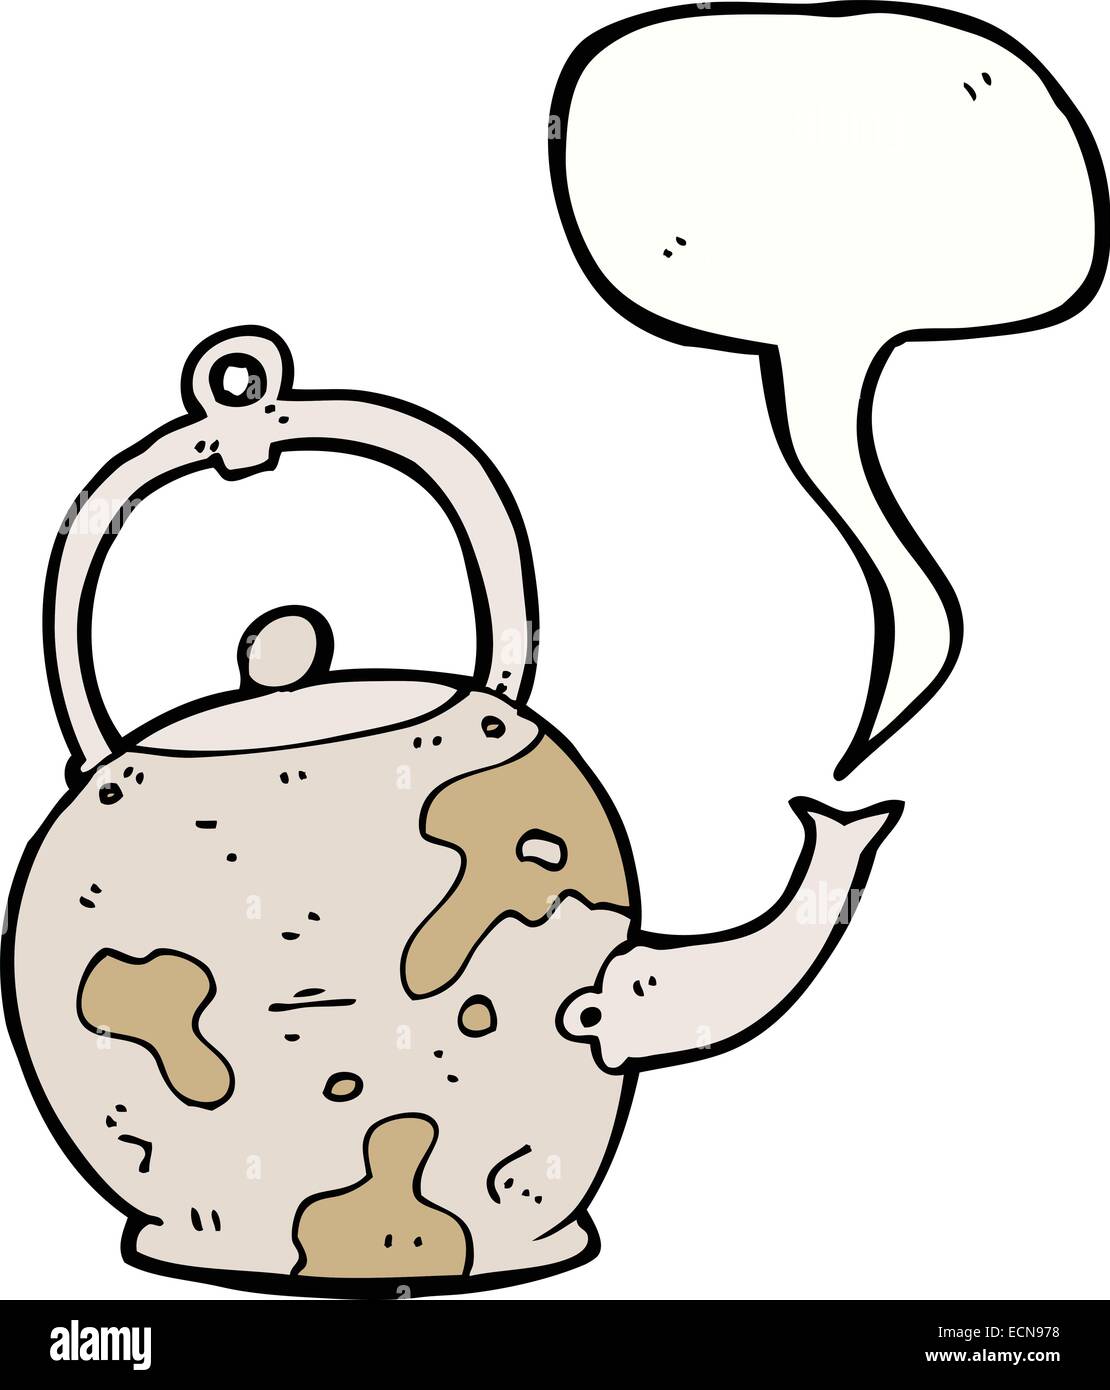 https://c8.alamy.com/comp/ECN978/cartoon-old-tea-pot-with-speech-bubble-ECN978.jpg